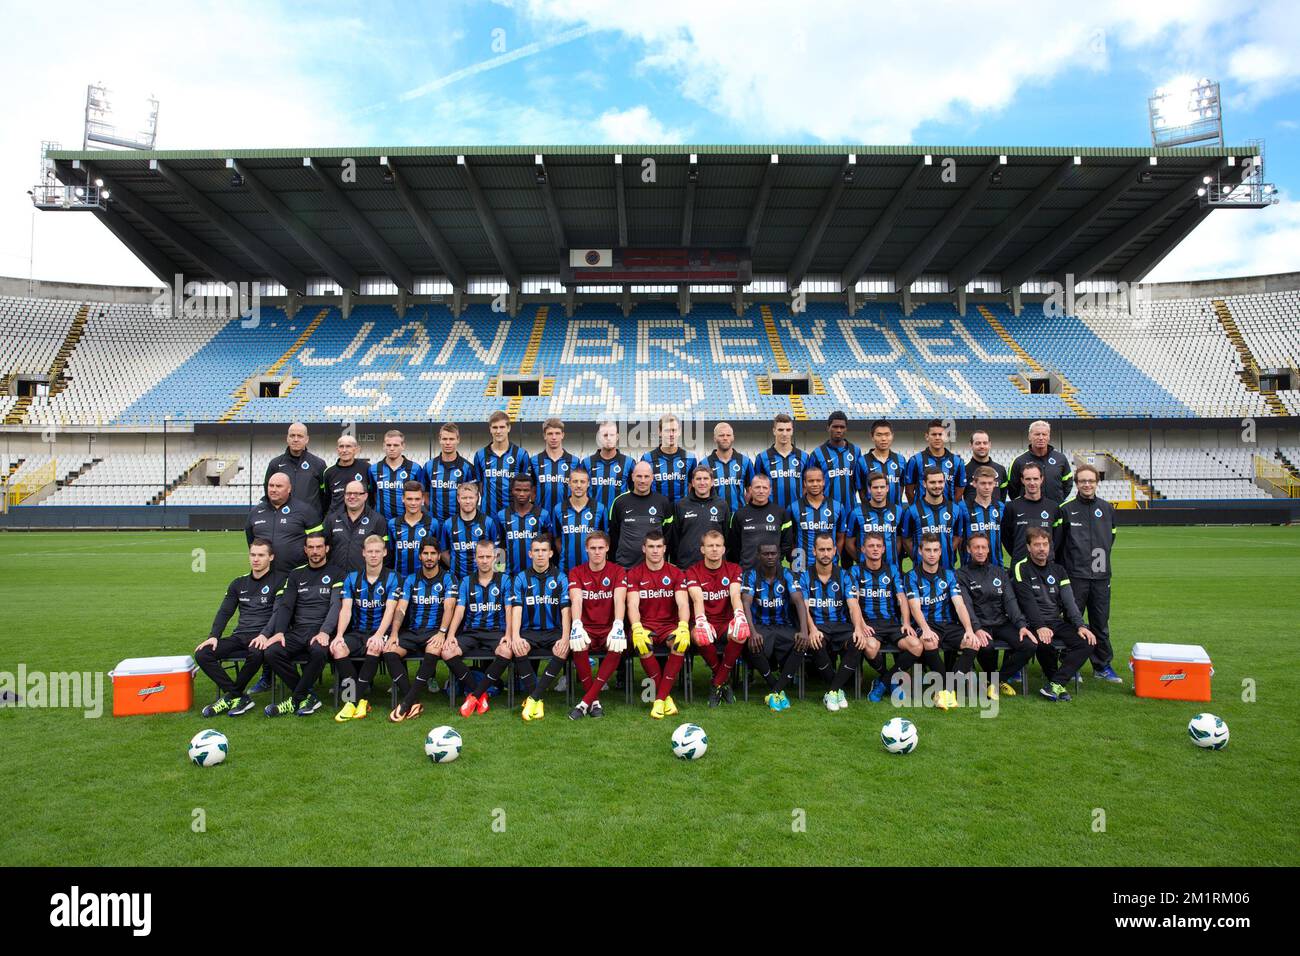 Soccer - Belgian Pro League - Club Brugge Photocall - Jan Breydelstadion